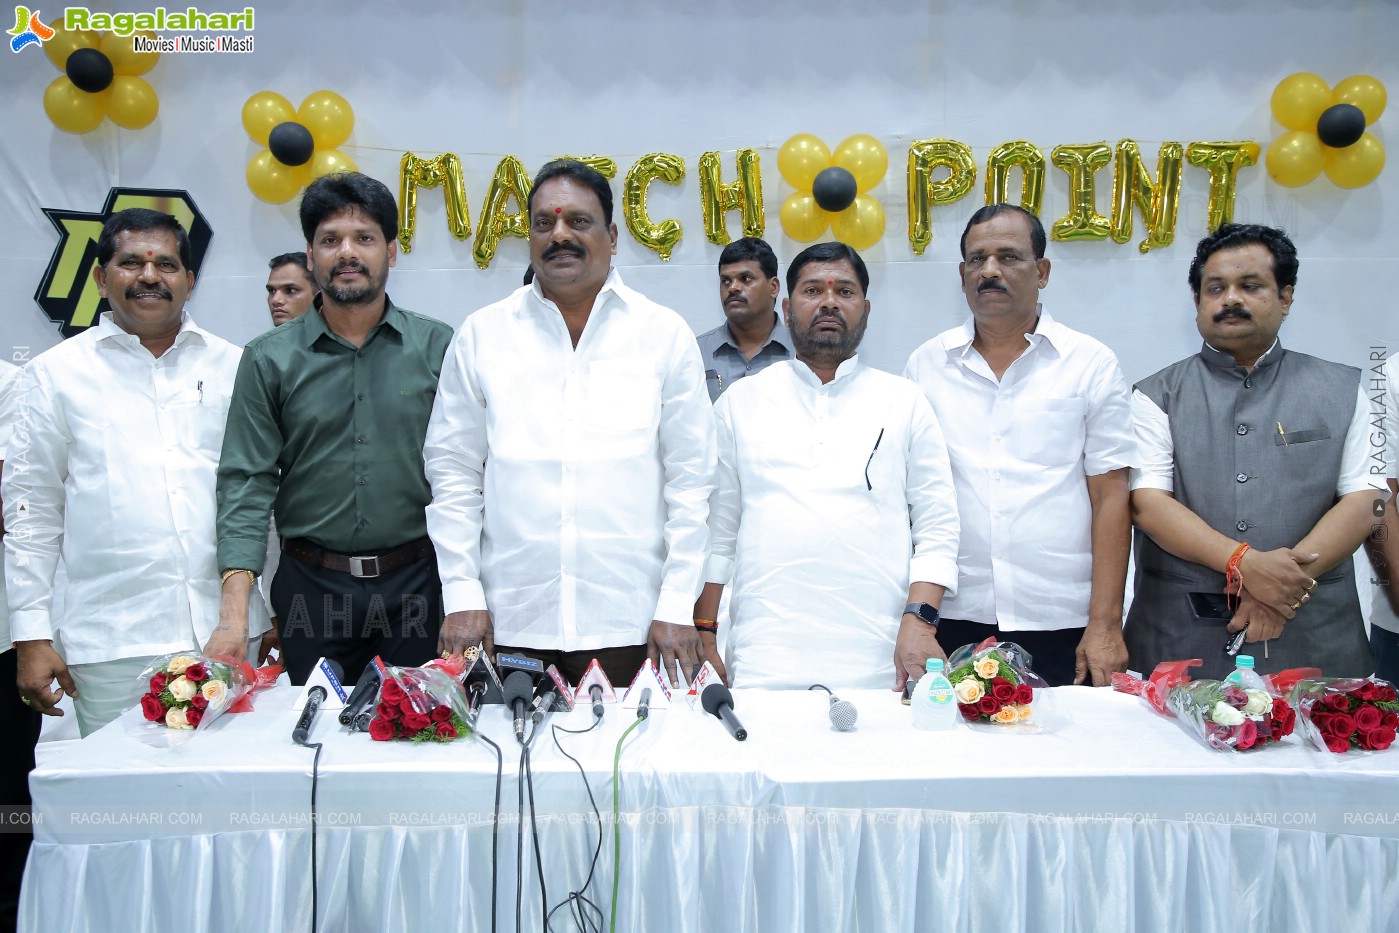 Match Point Badminton Academy Inauguration, Hyderabad 